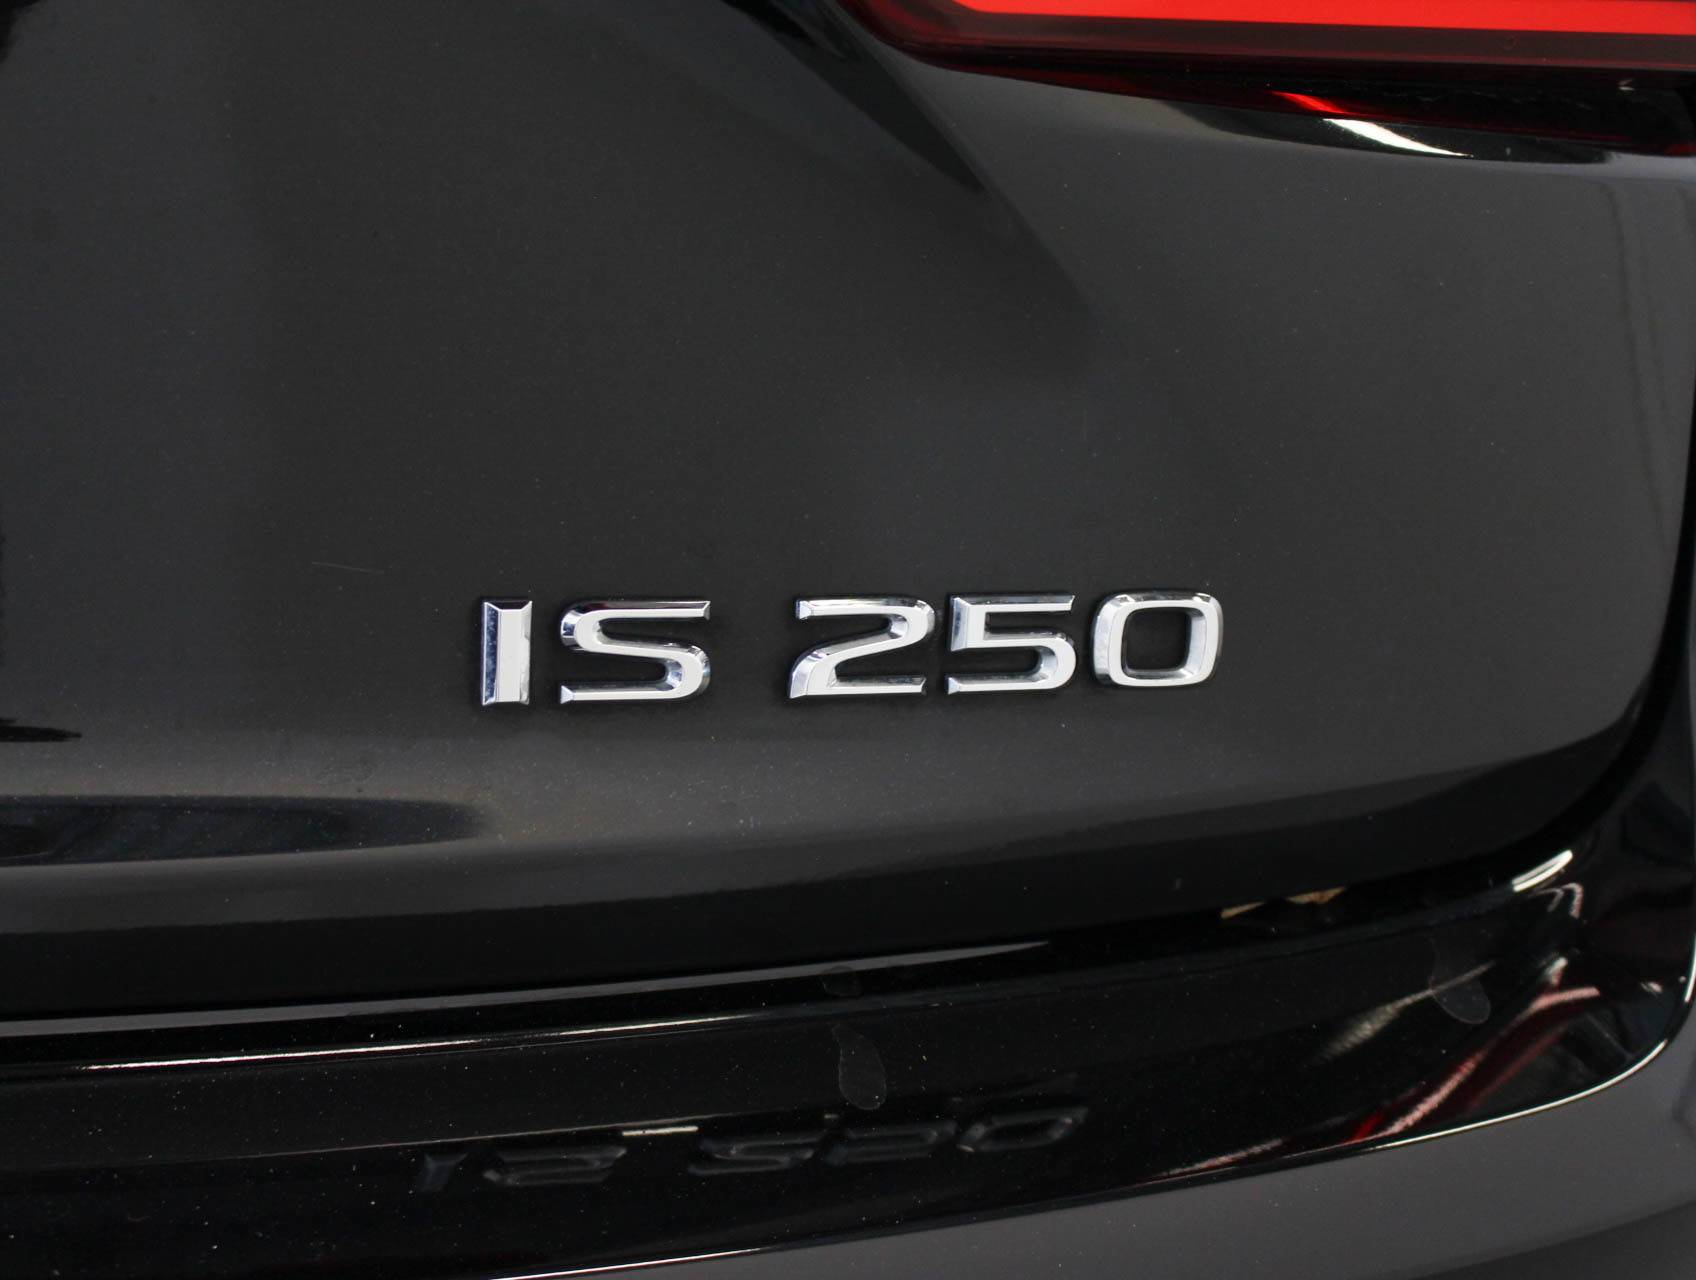 Florida Fine Cars - Used LEXUS IS 250 2015 MIAMI 